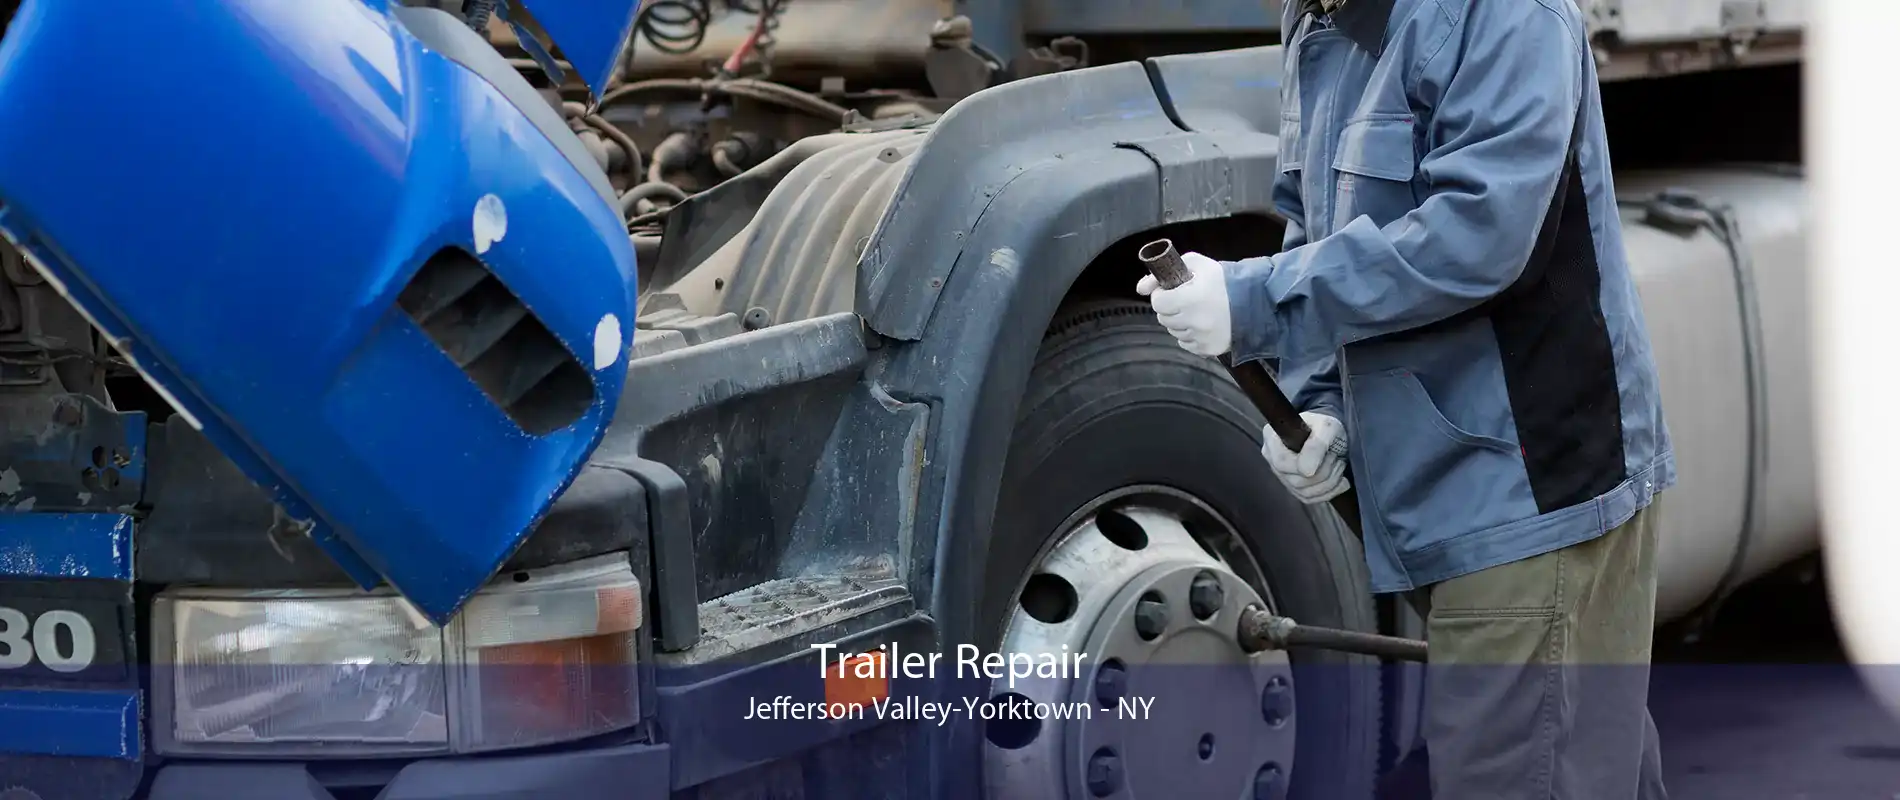 Trailer Repair Jefferson Valley-Yorktown - NY